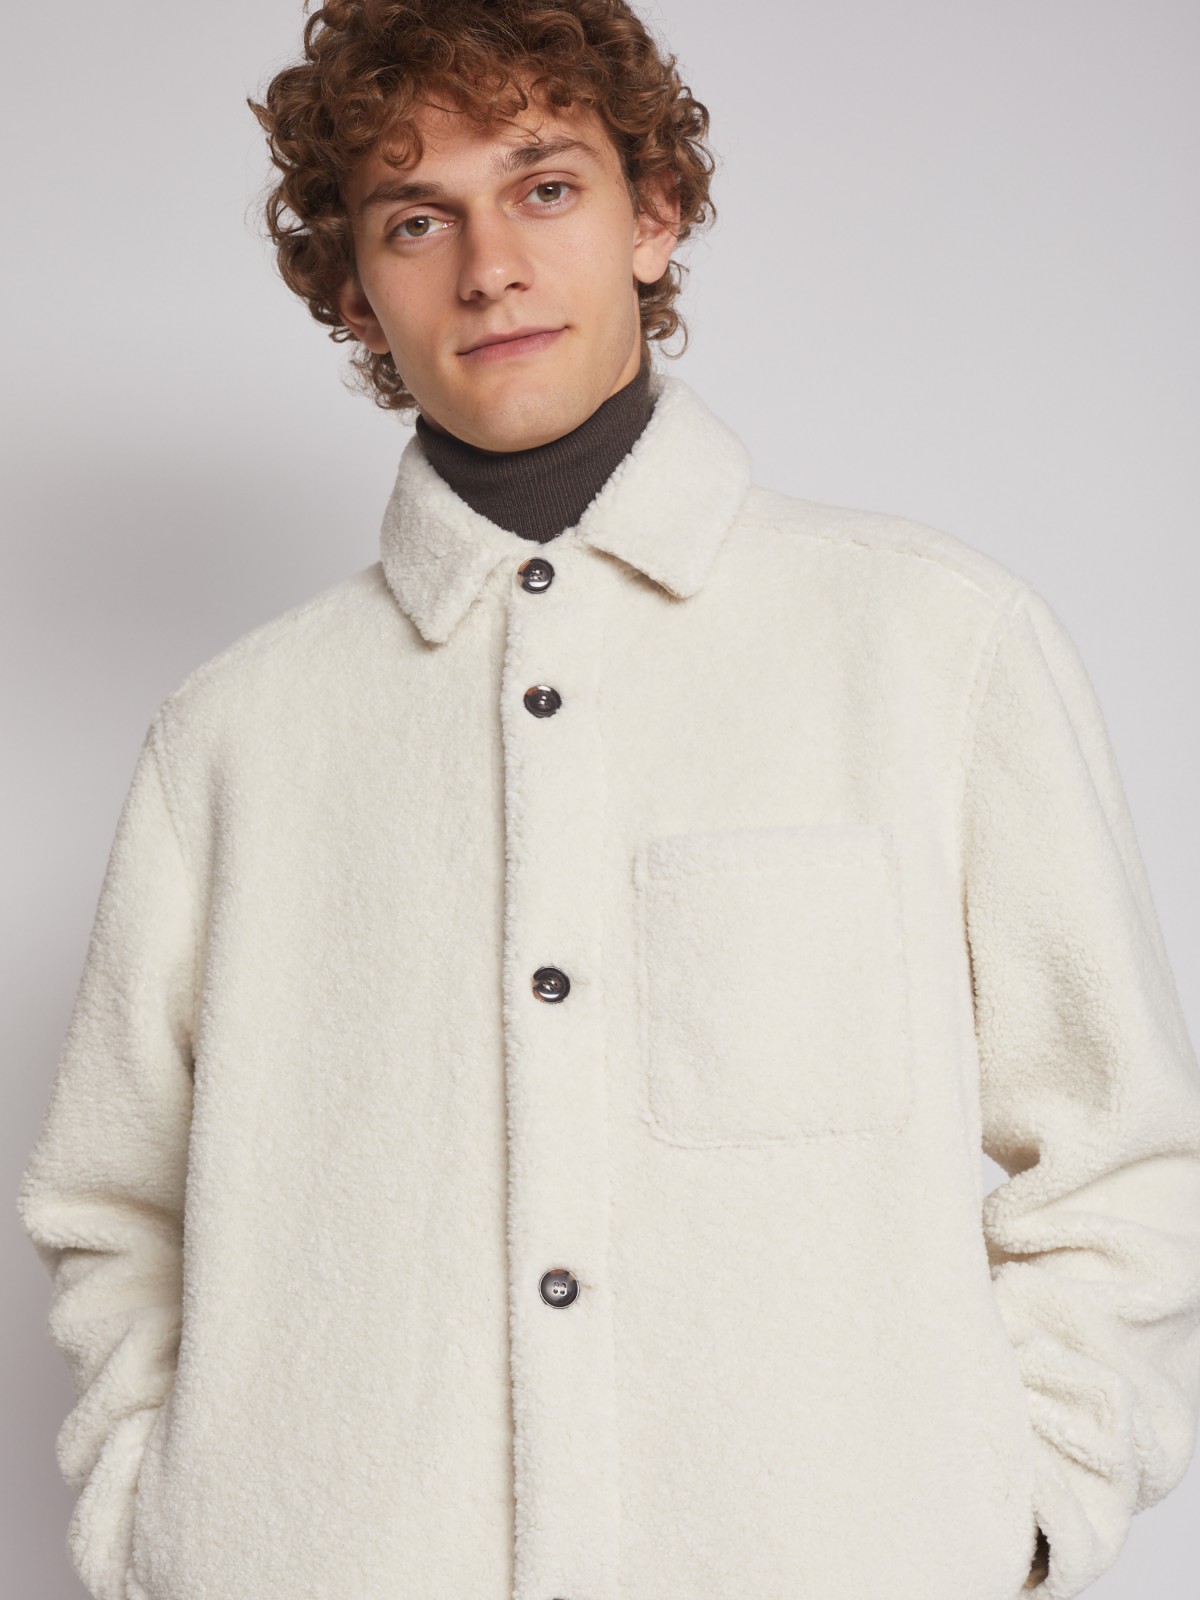 Утеплённая куртка-рубашка из экомеха zolla 012335550034, цвет бежевый, размер S - фото 5